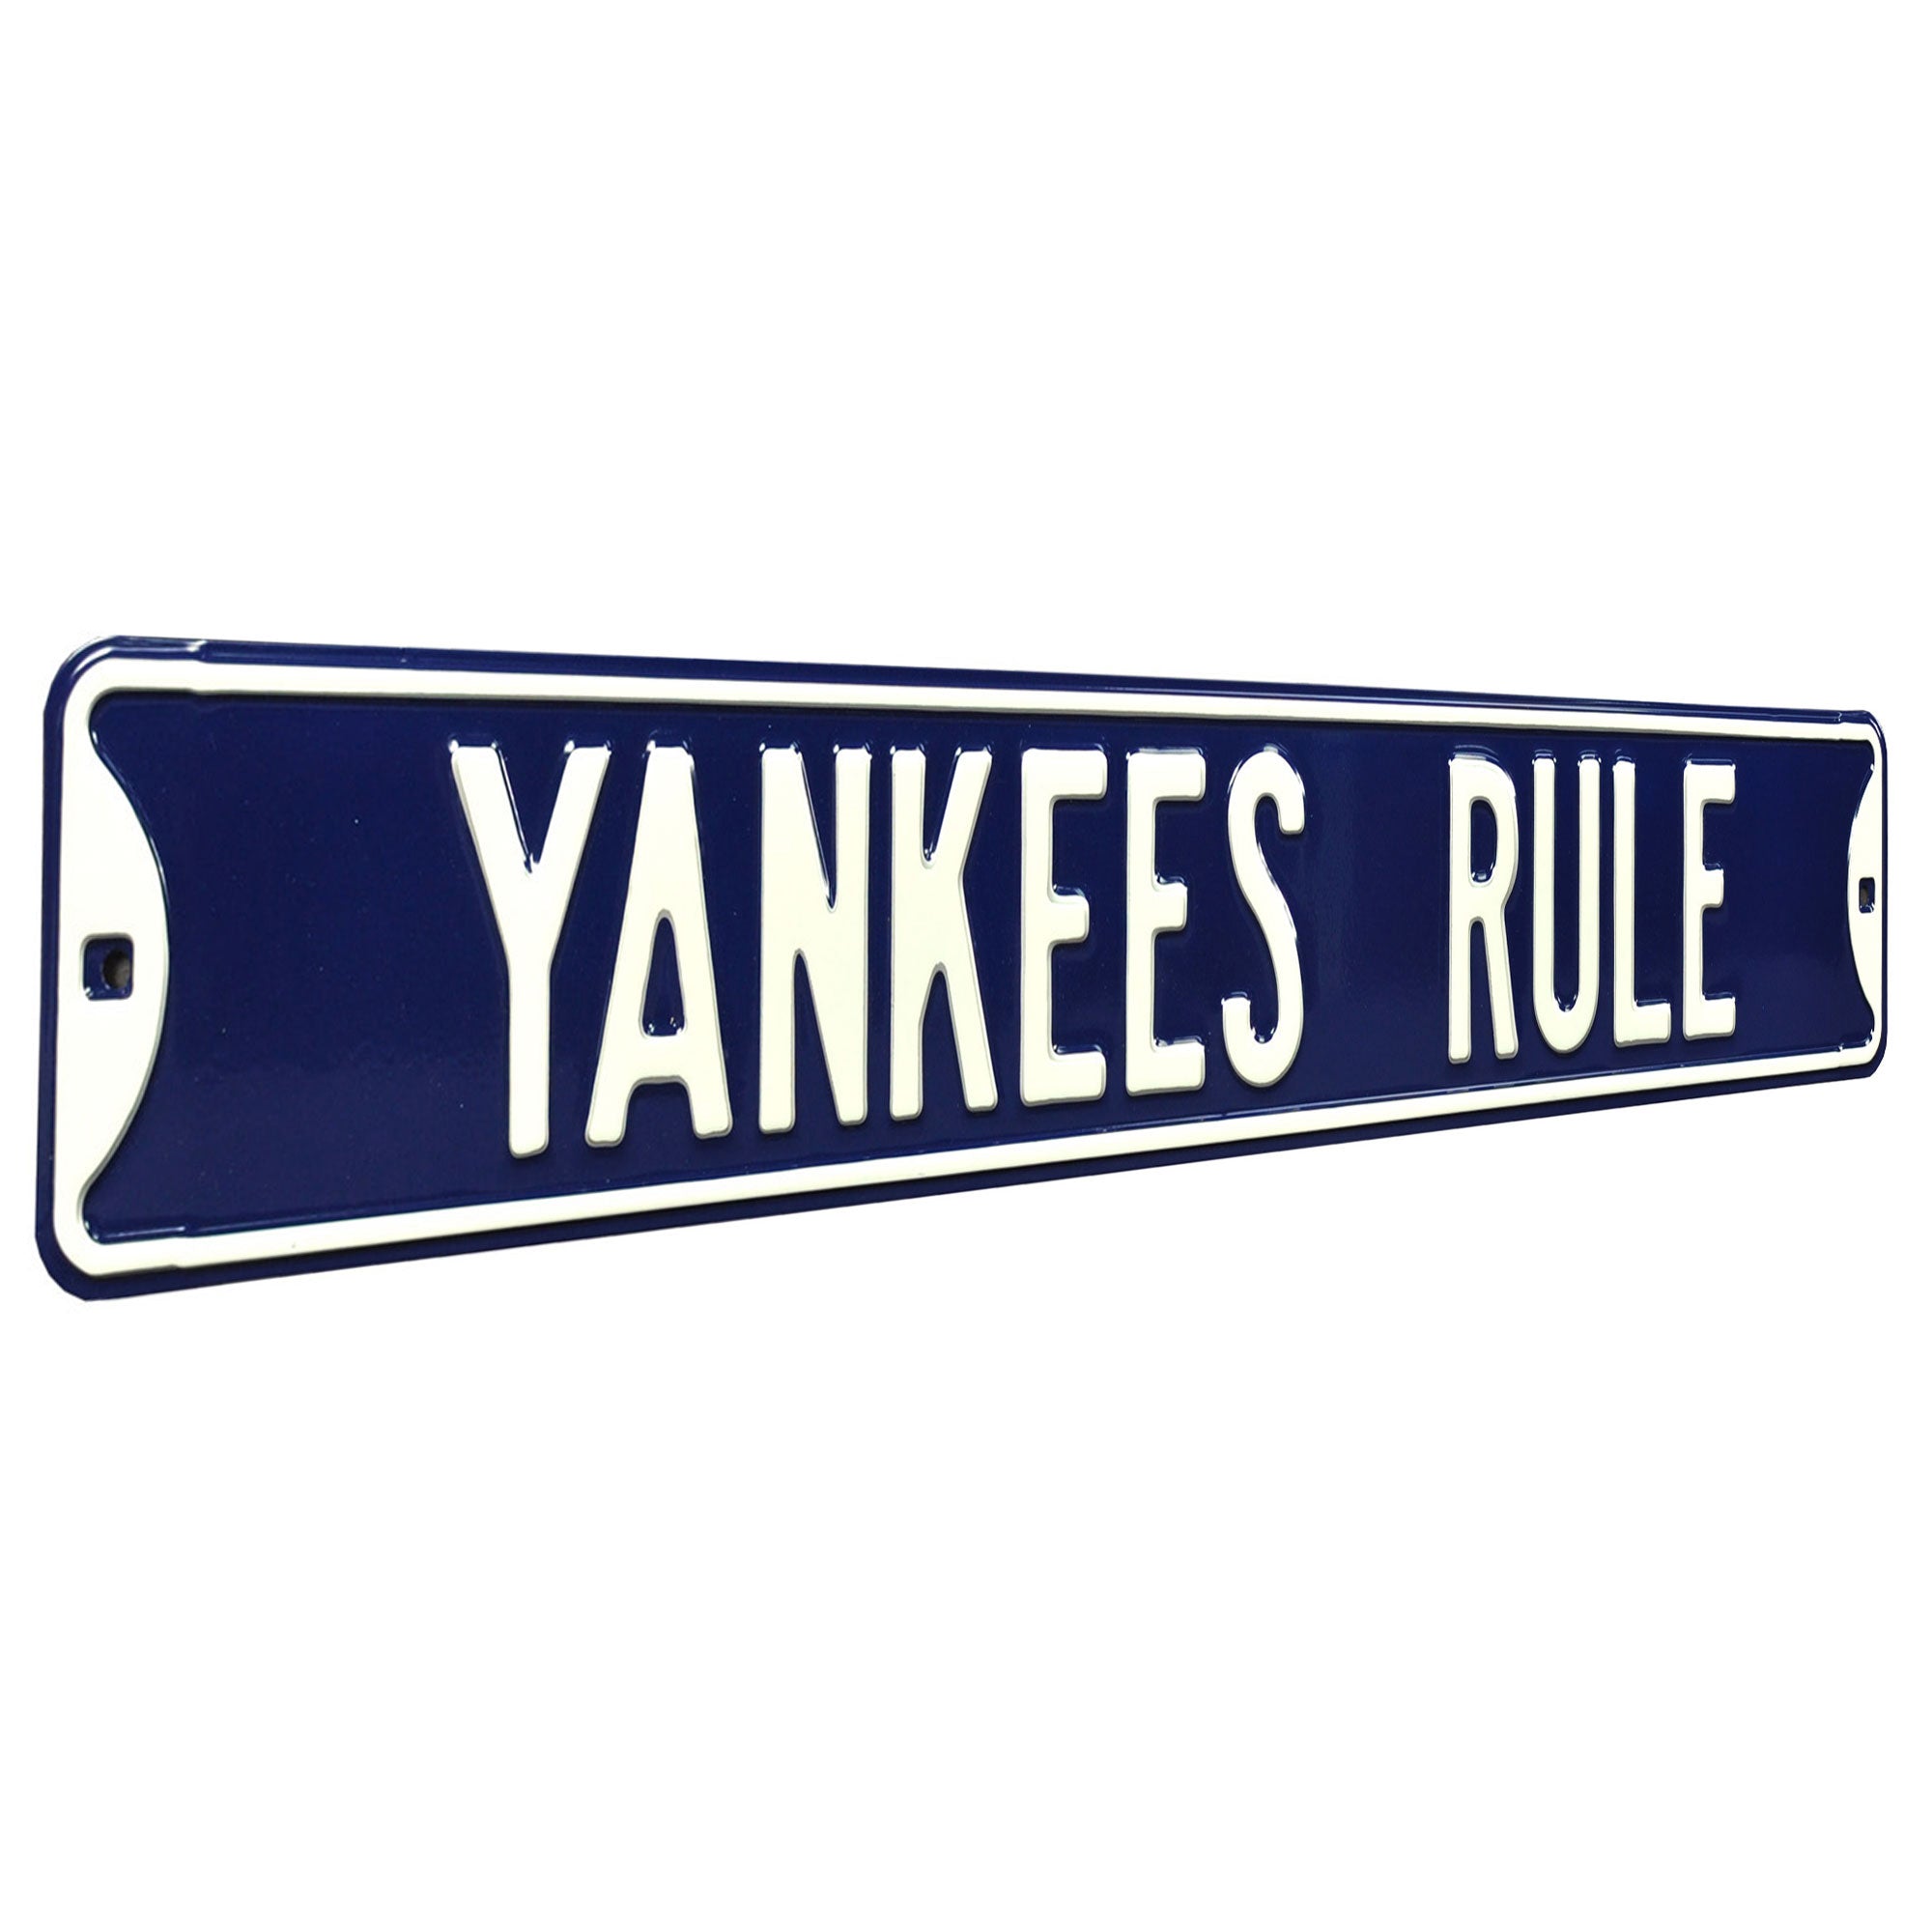 New York Yankees 5'' x 20'' Metal Street Sign